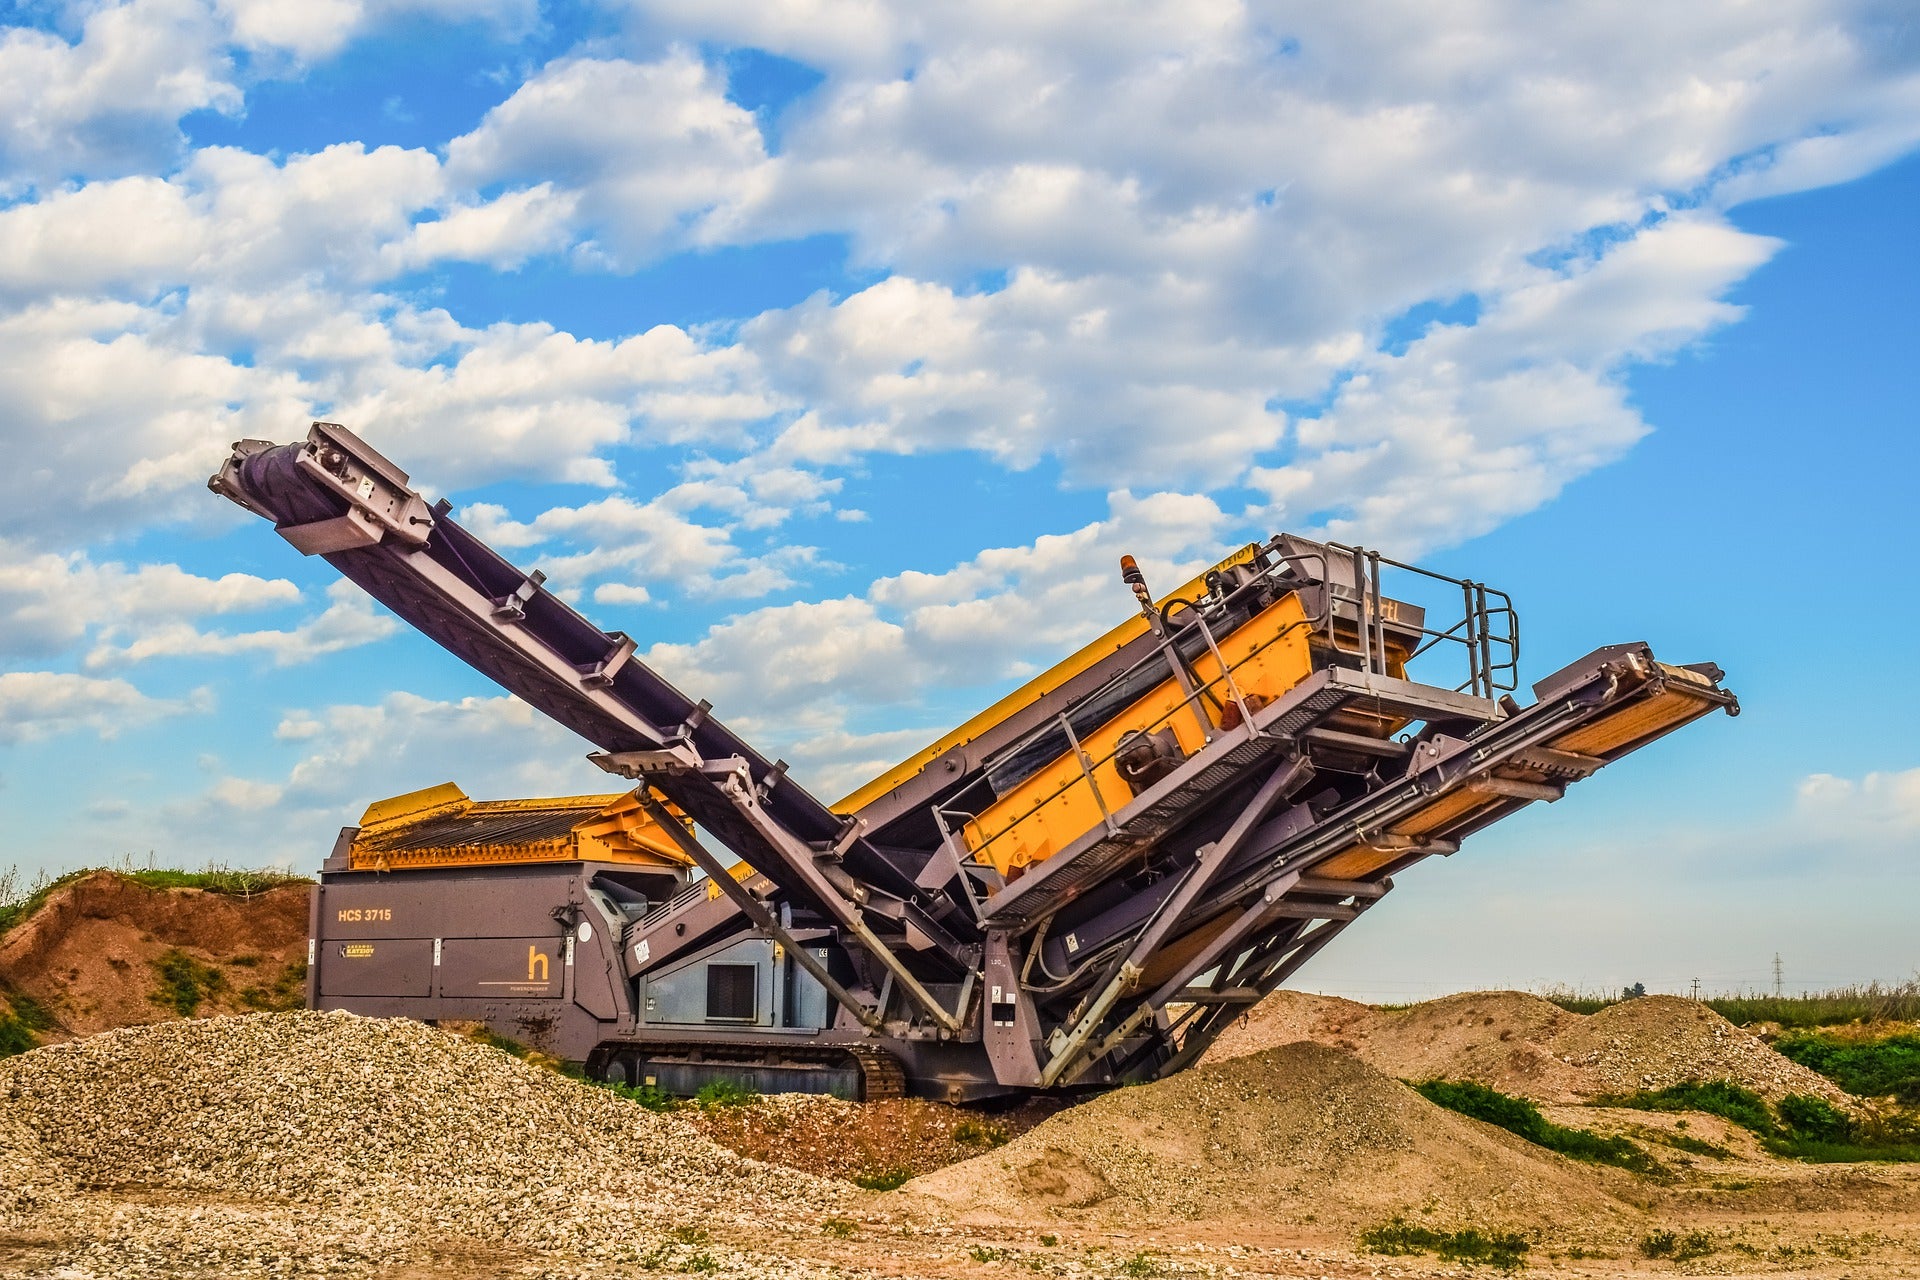 OZ approves development of $1.13bn copper project in Australia